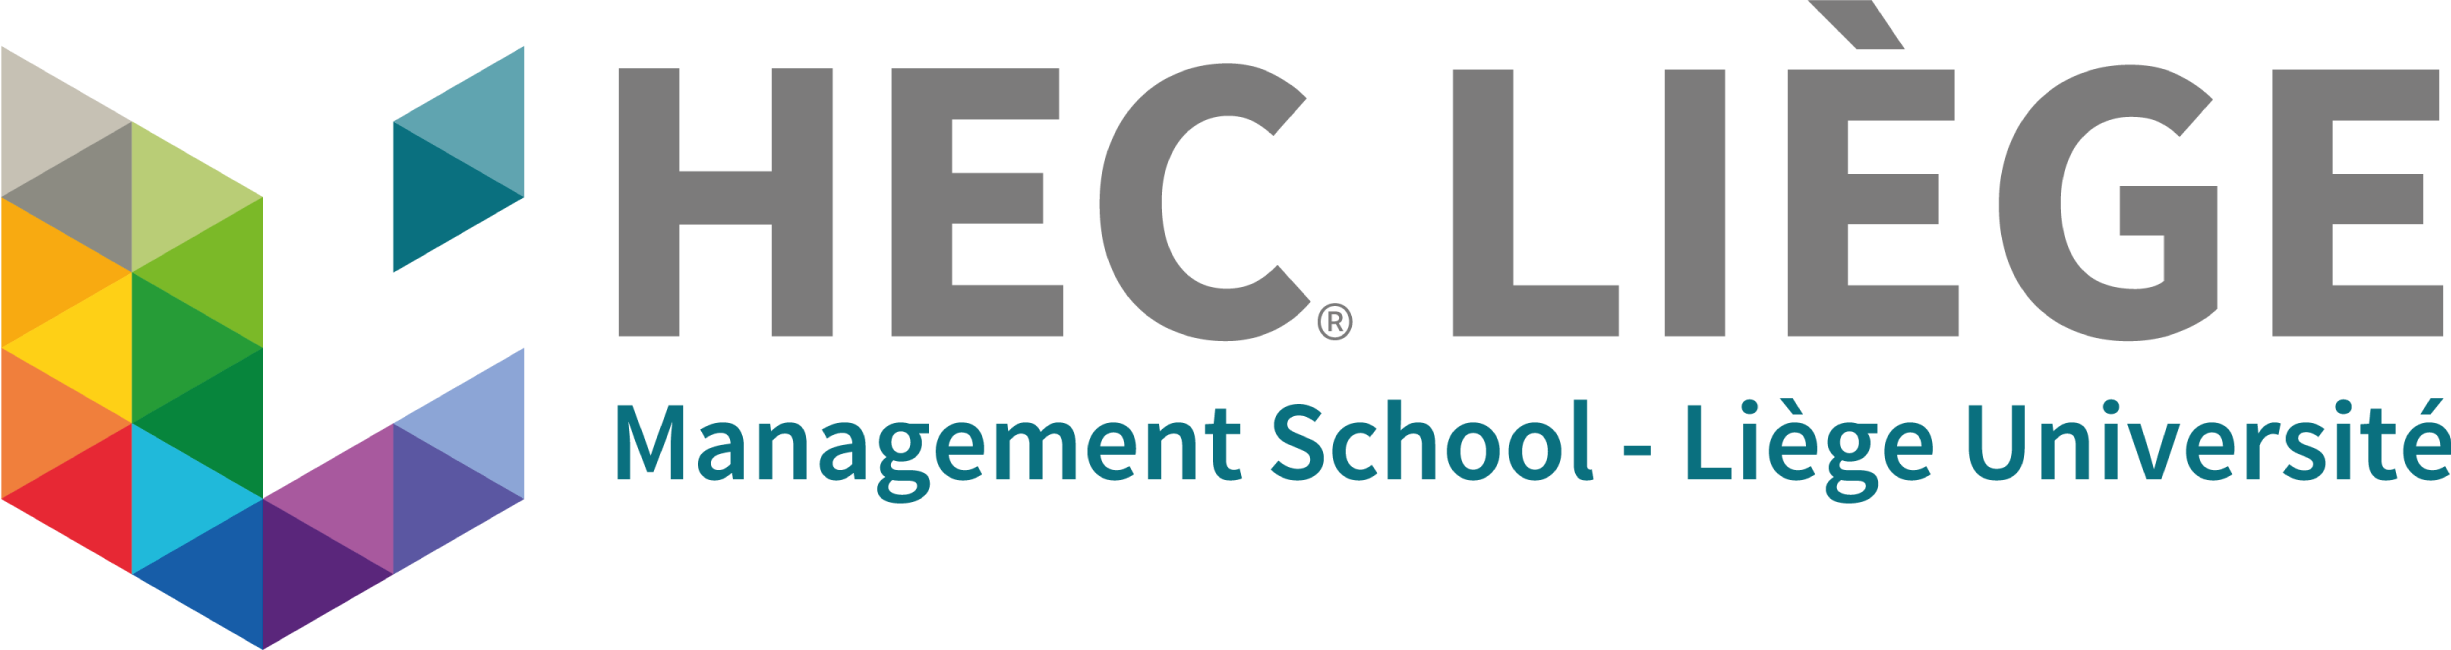 HEC-logo-banner-site